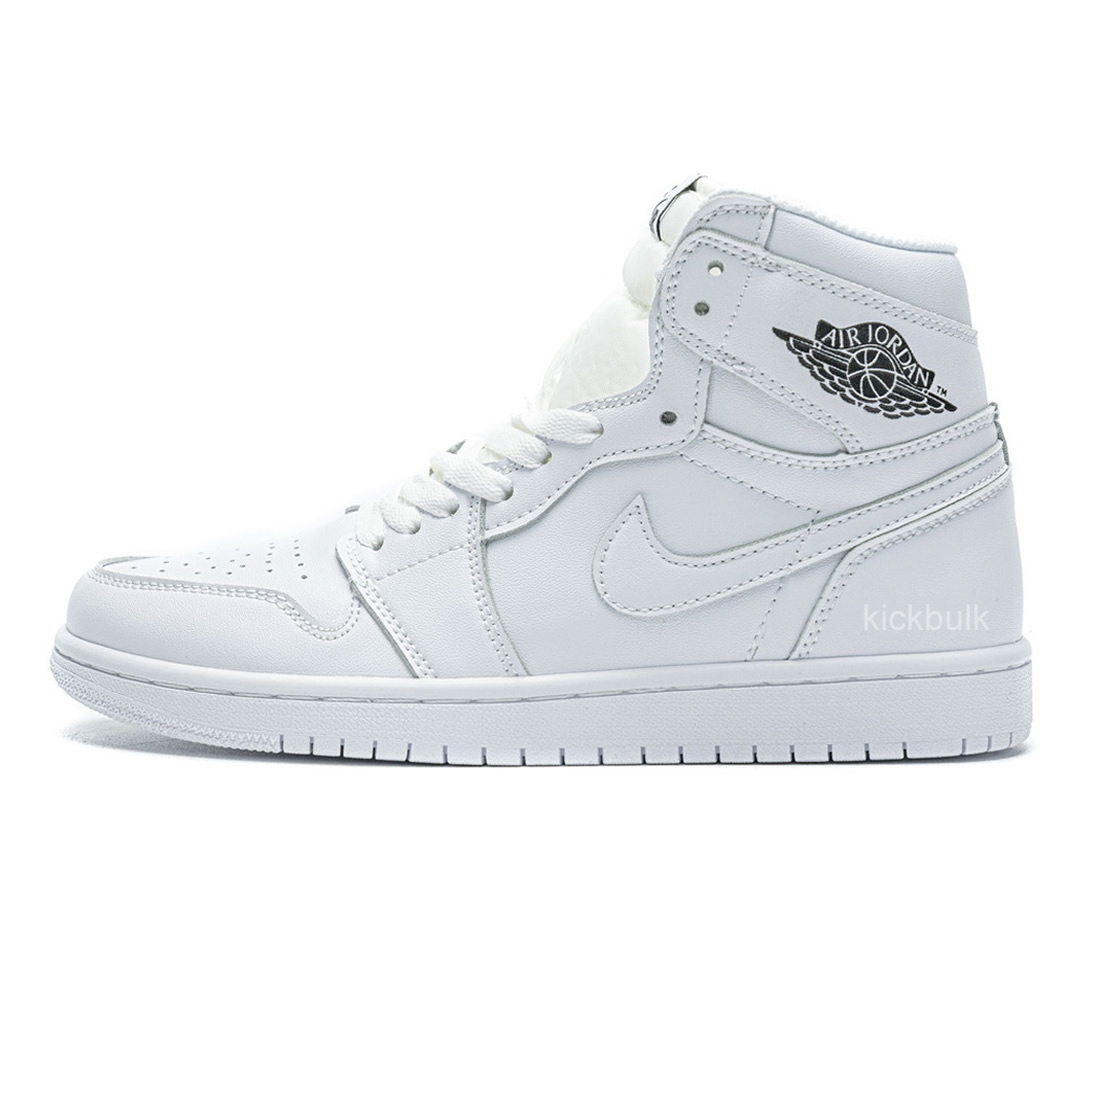 Nike Air Jordan 1 High All White 555088 111 1 - www.kickbulk.cc